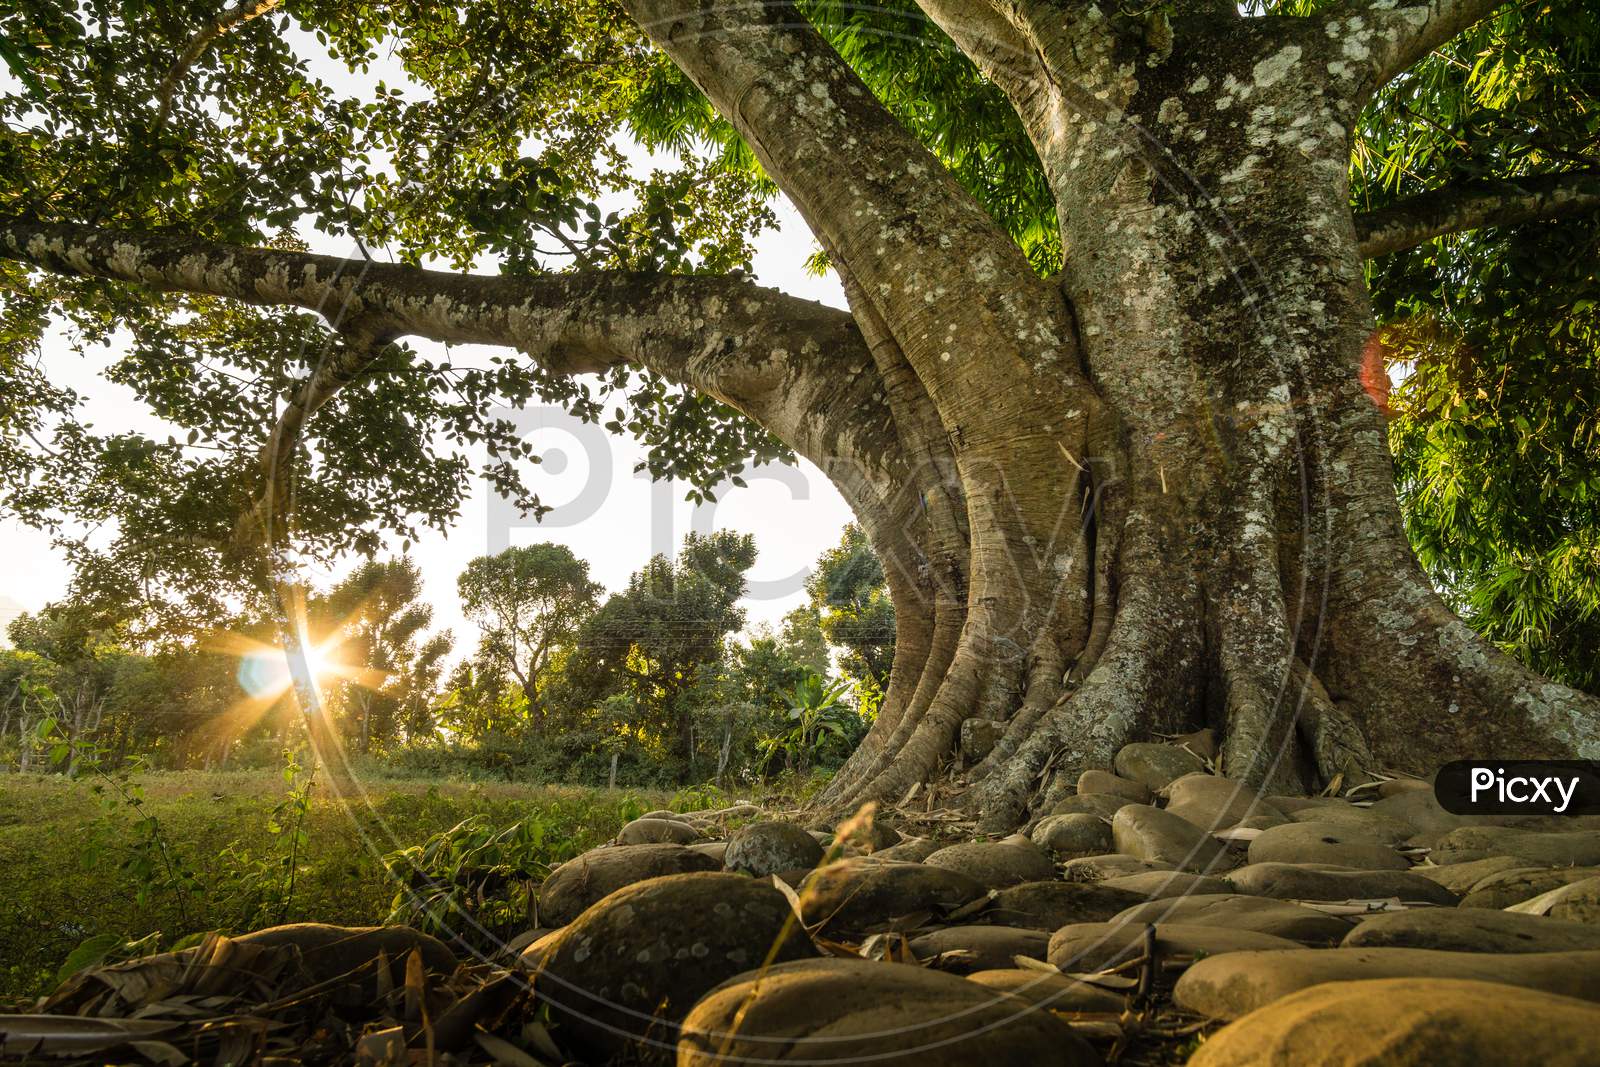 Stones under the Banyan Tree - Ficus benghalensis